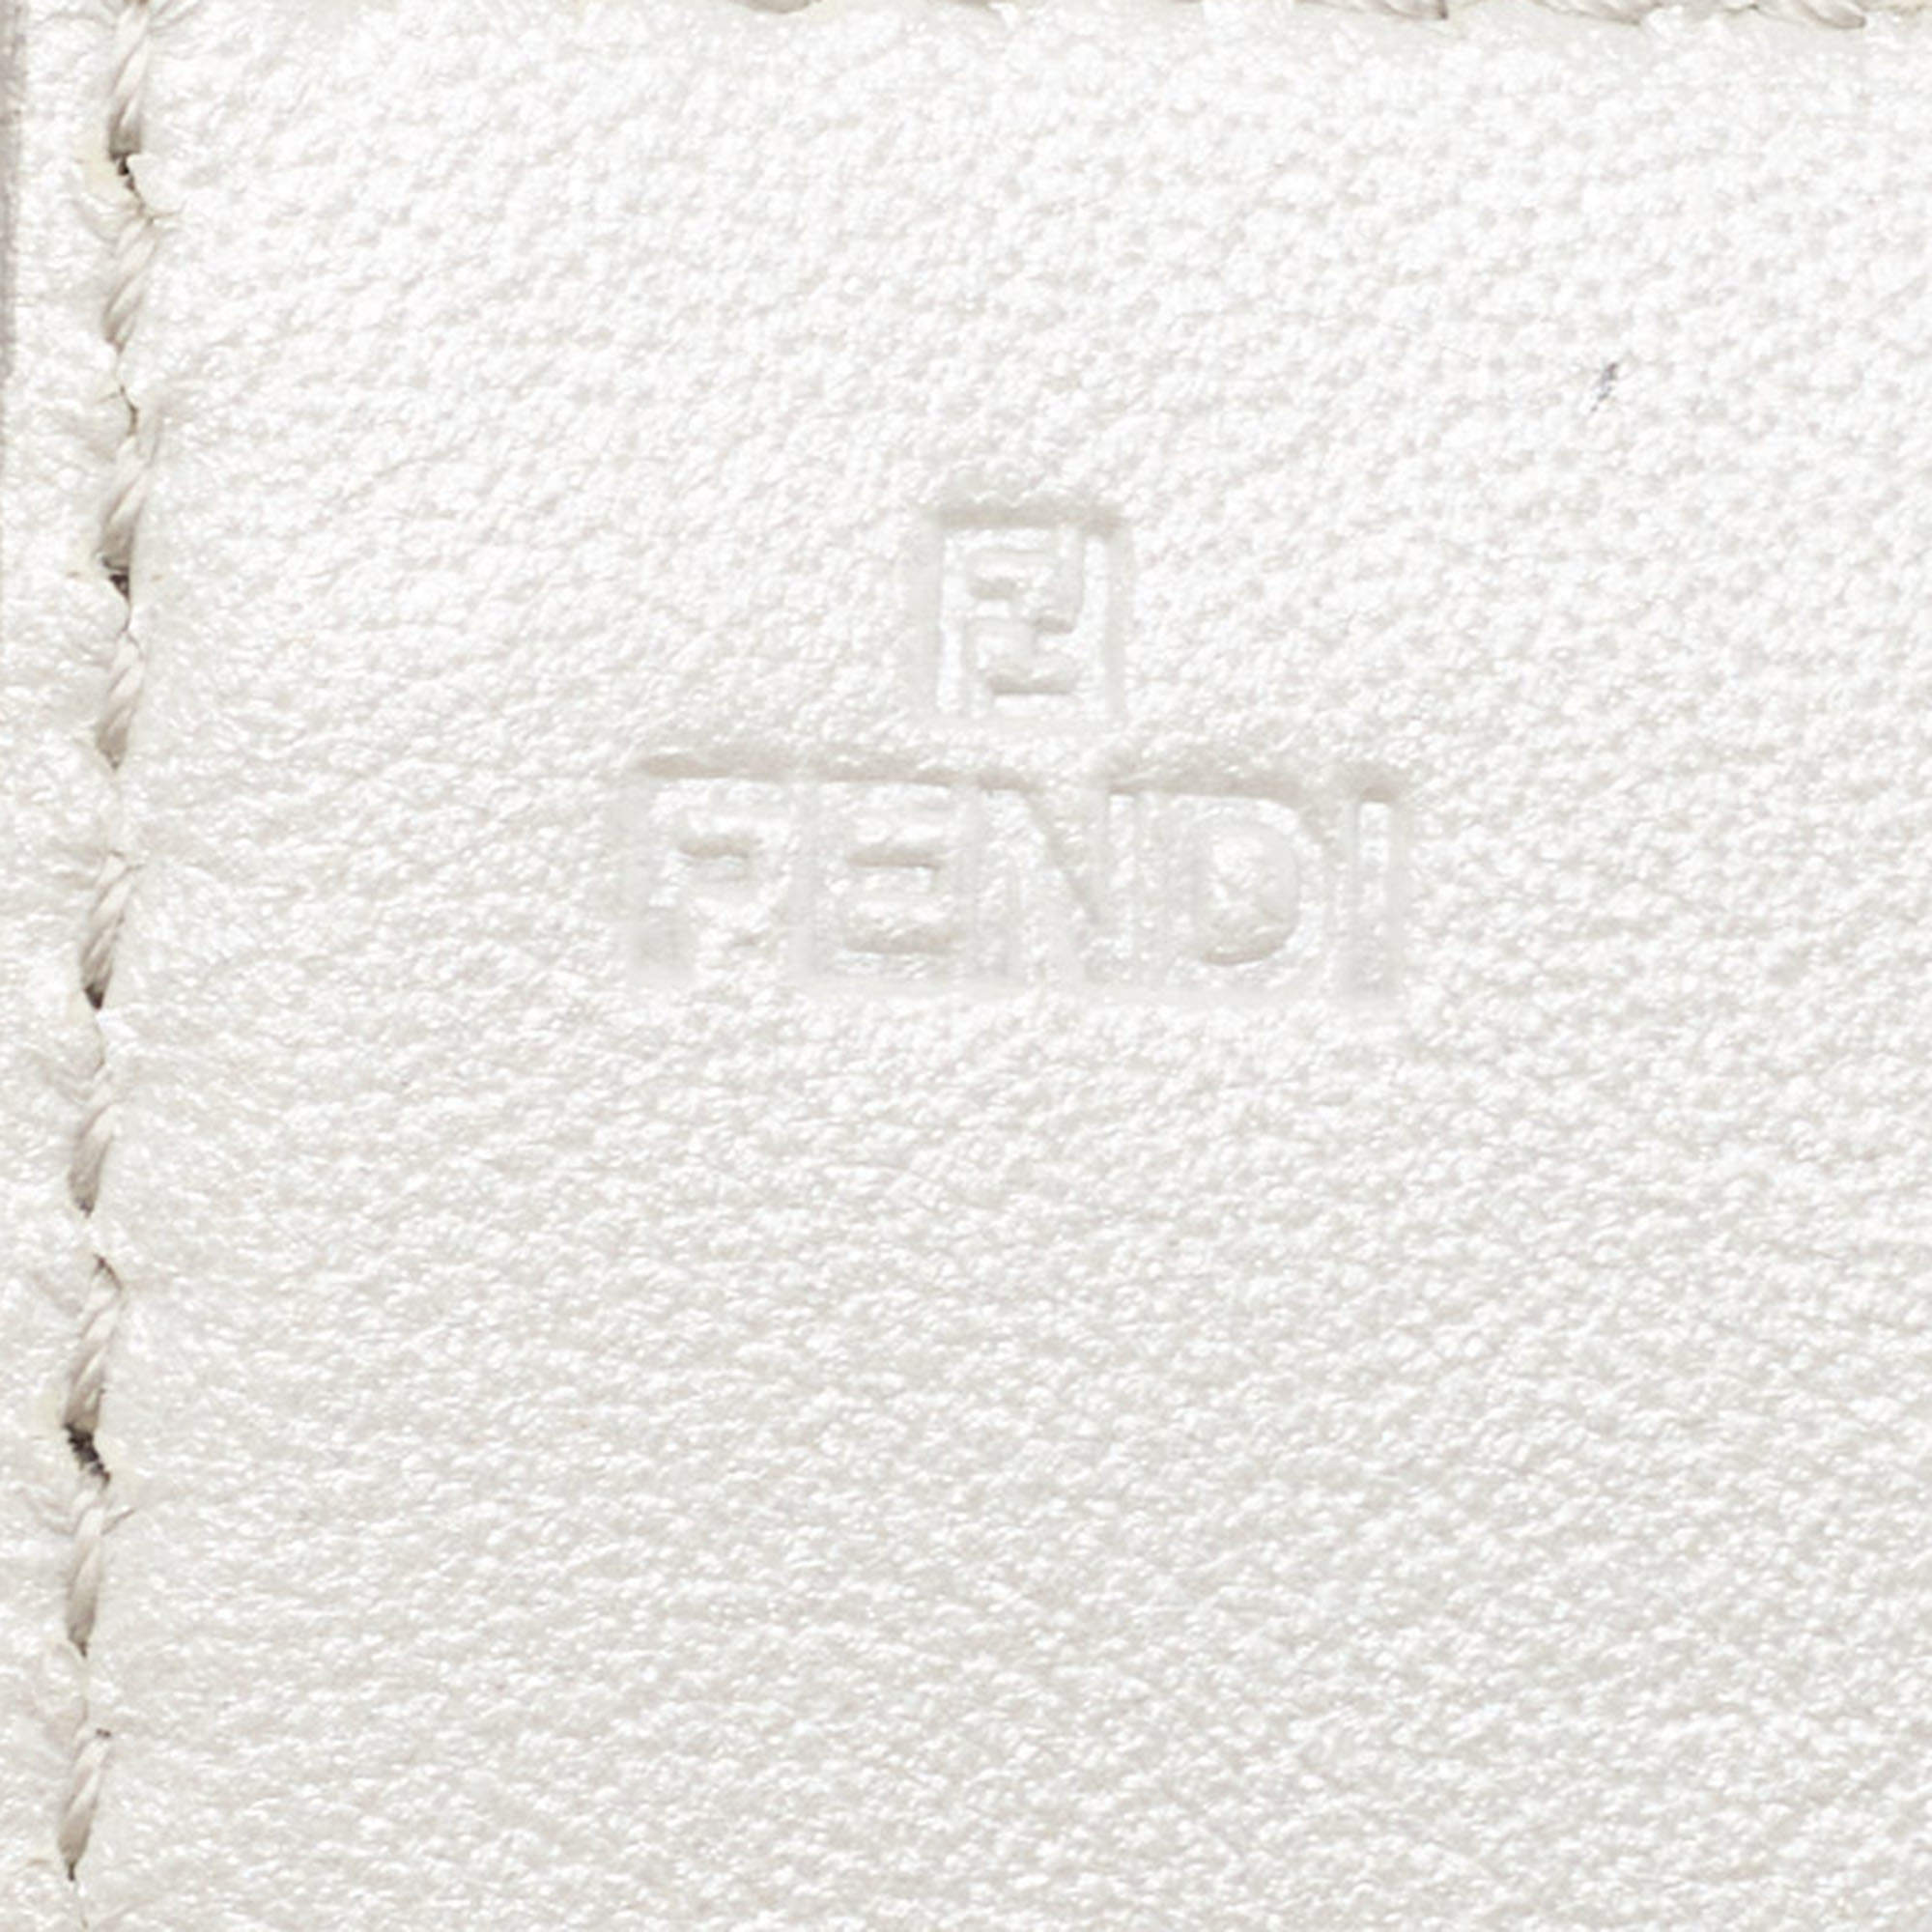 Fendi Silver Textured Leather Logo Flap Continental Wallet Fendi